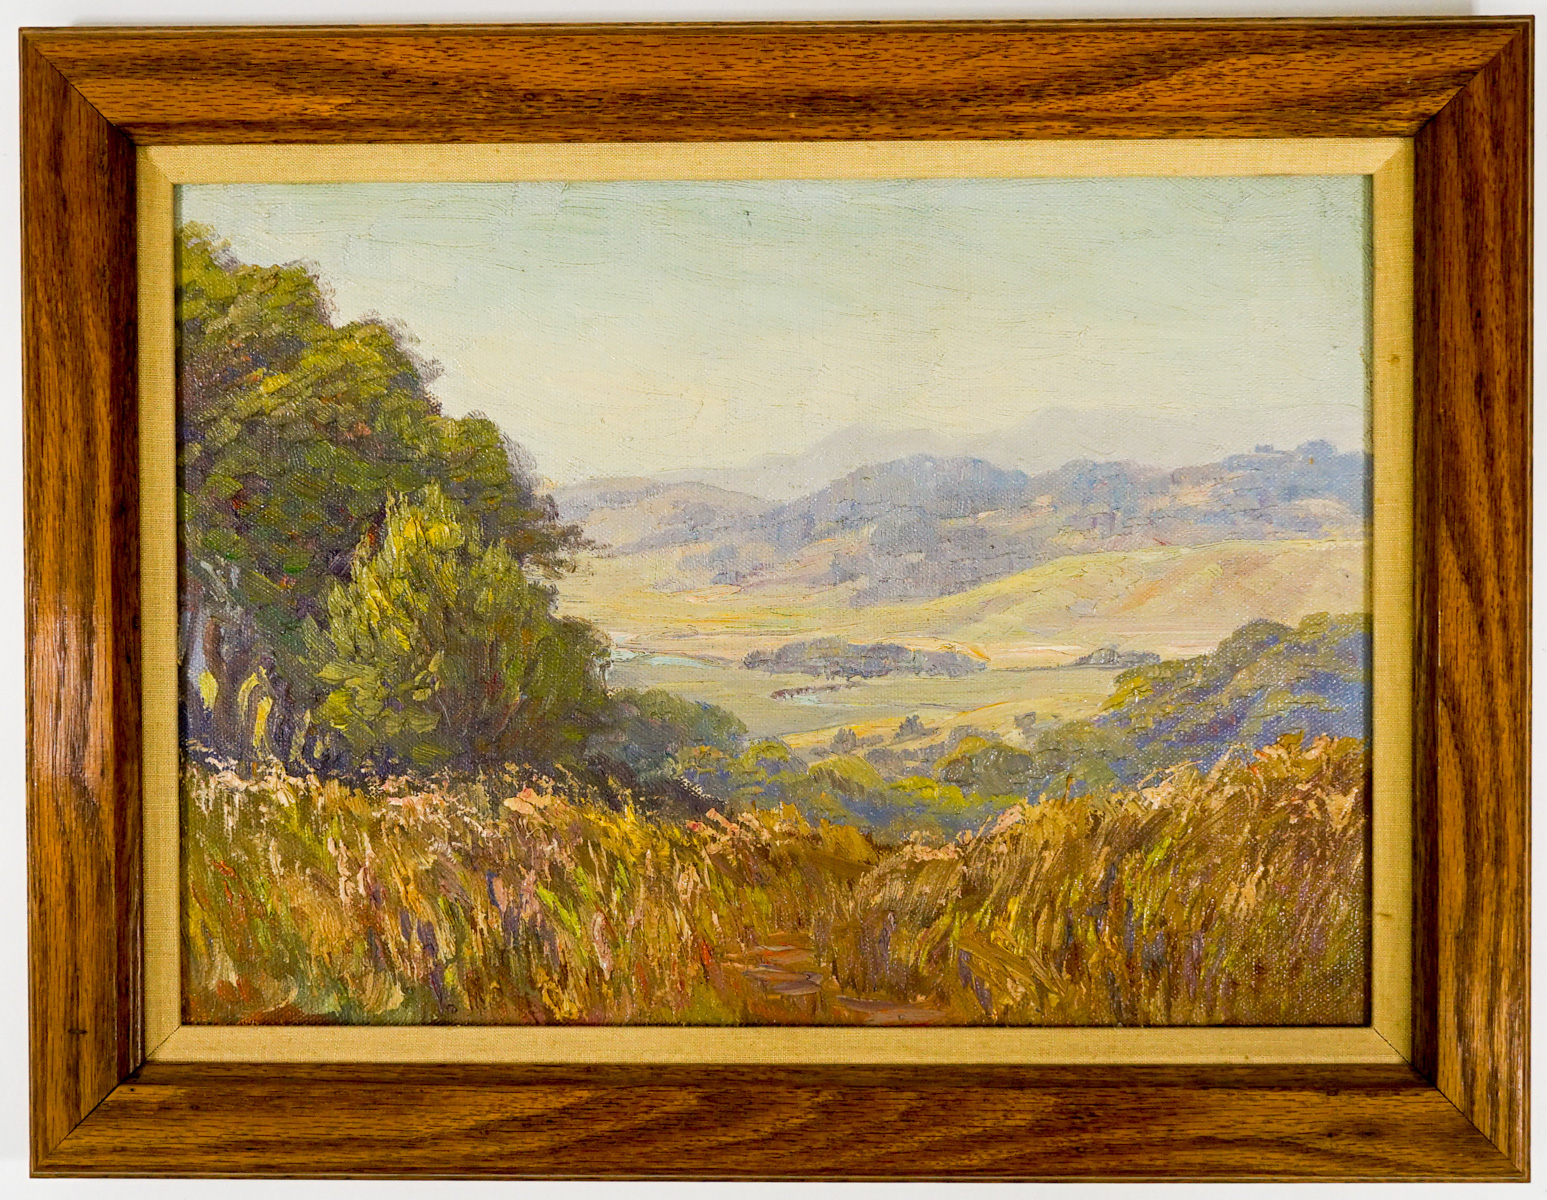 Fredrick Kress Oil on Canvas [Marin County]